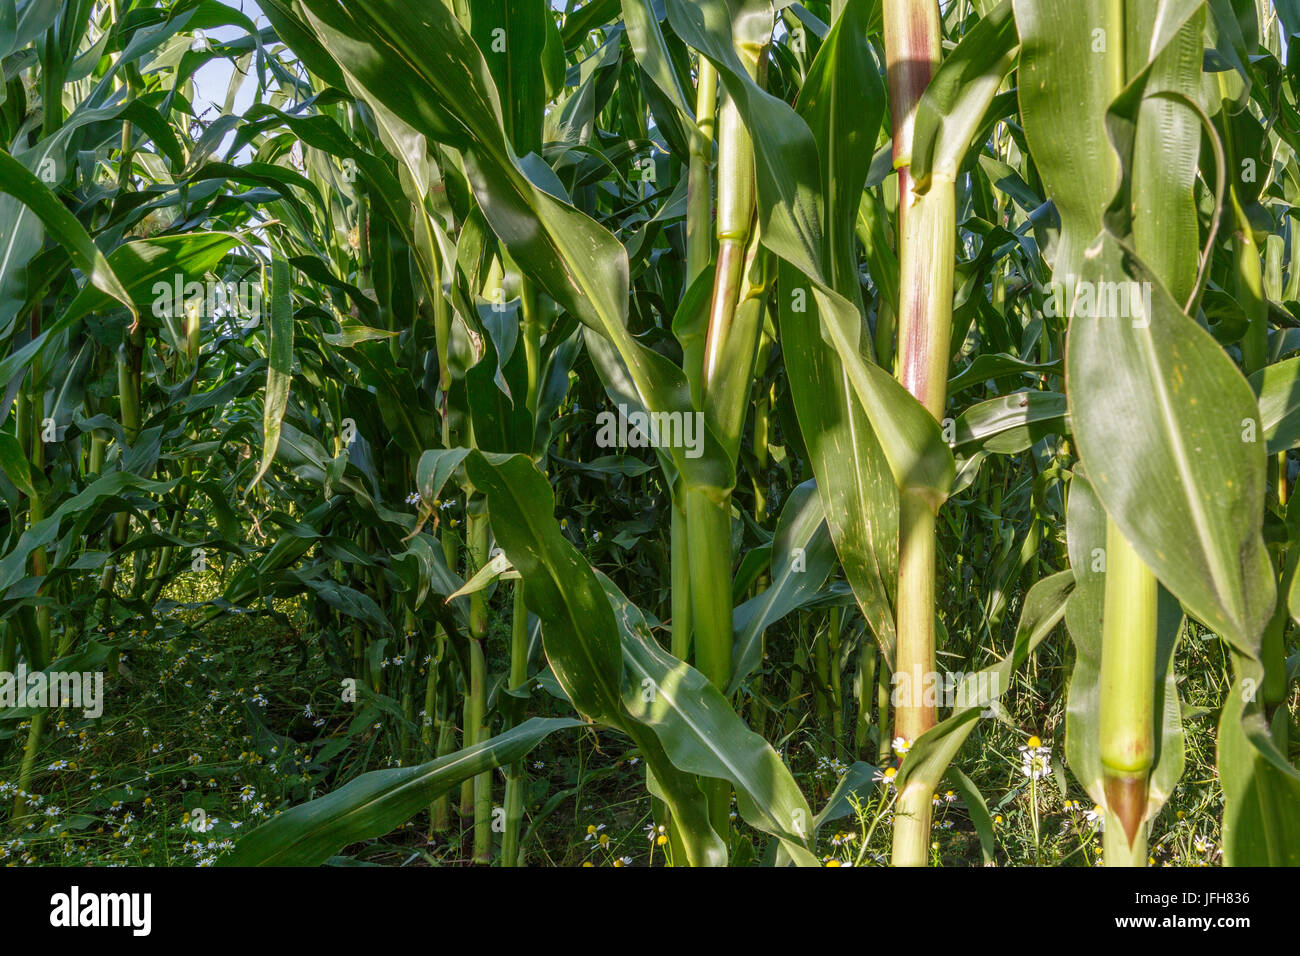 In the corn field Stock Photo